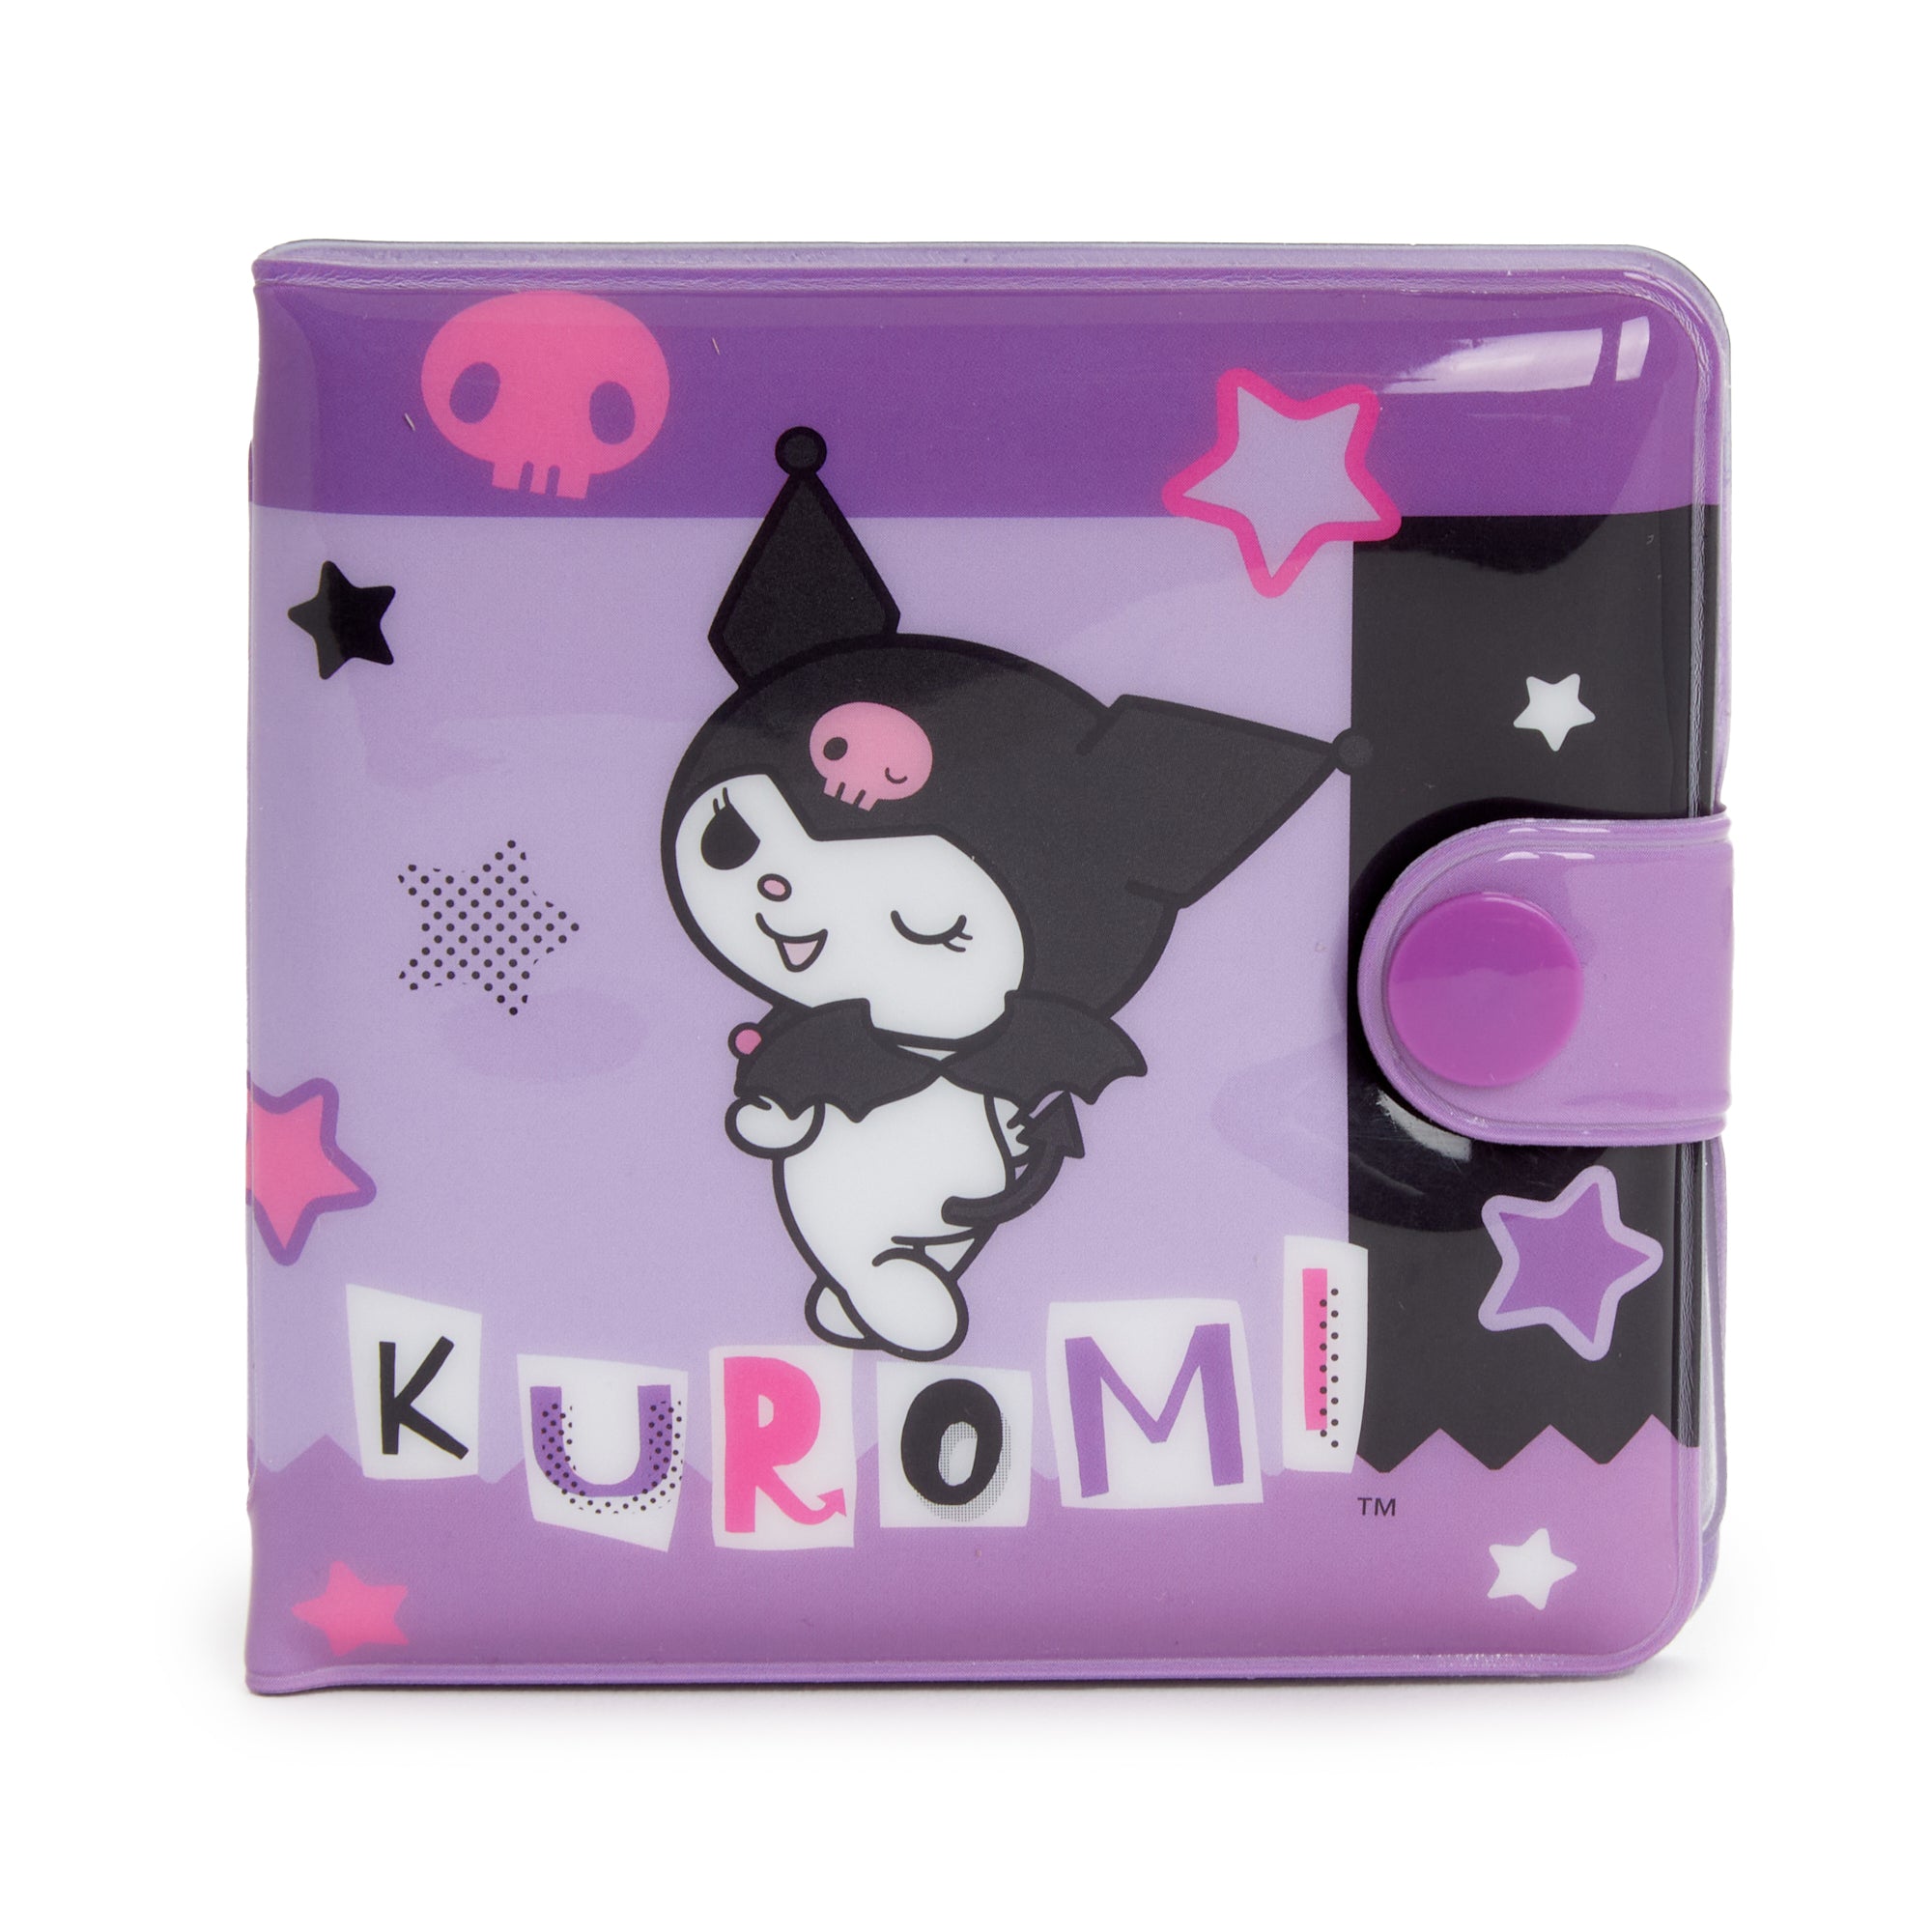 Kuromi Vinyl Snap Wallet Bags HUNET GLOBAL CREATIONS INC   